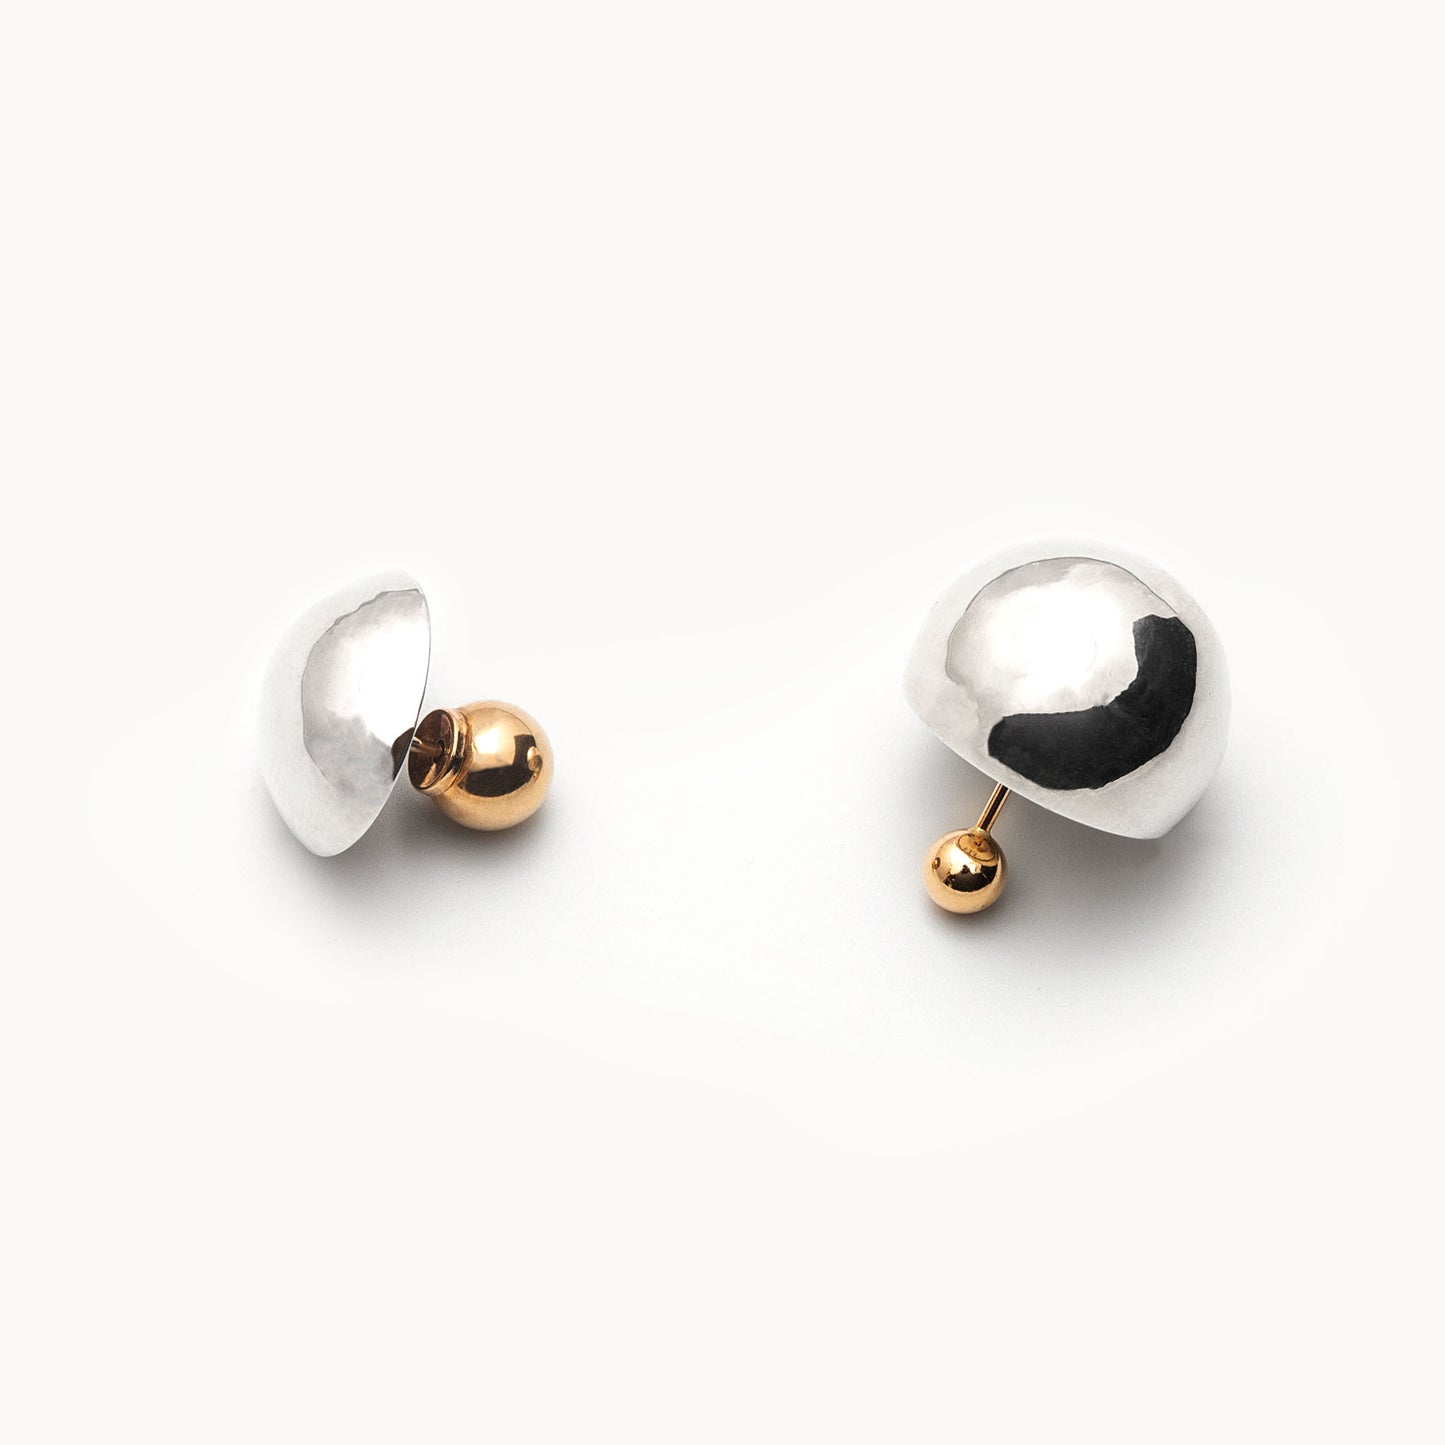 【NEW】K18YG Double Ball Earring | 2302E042020